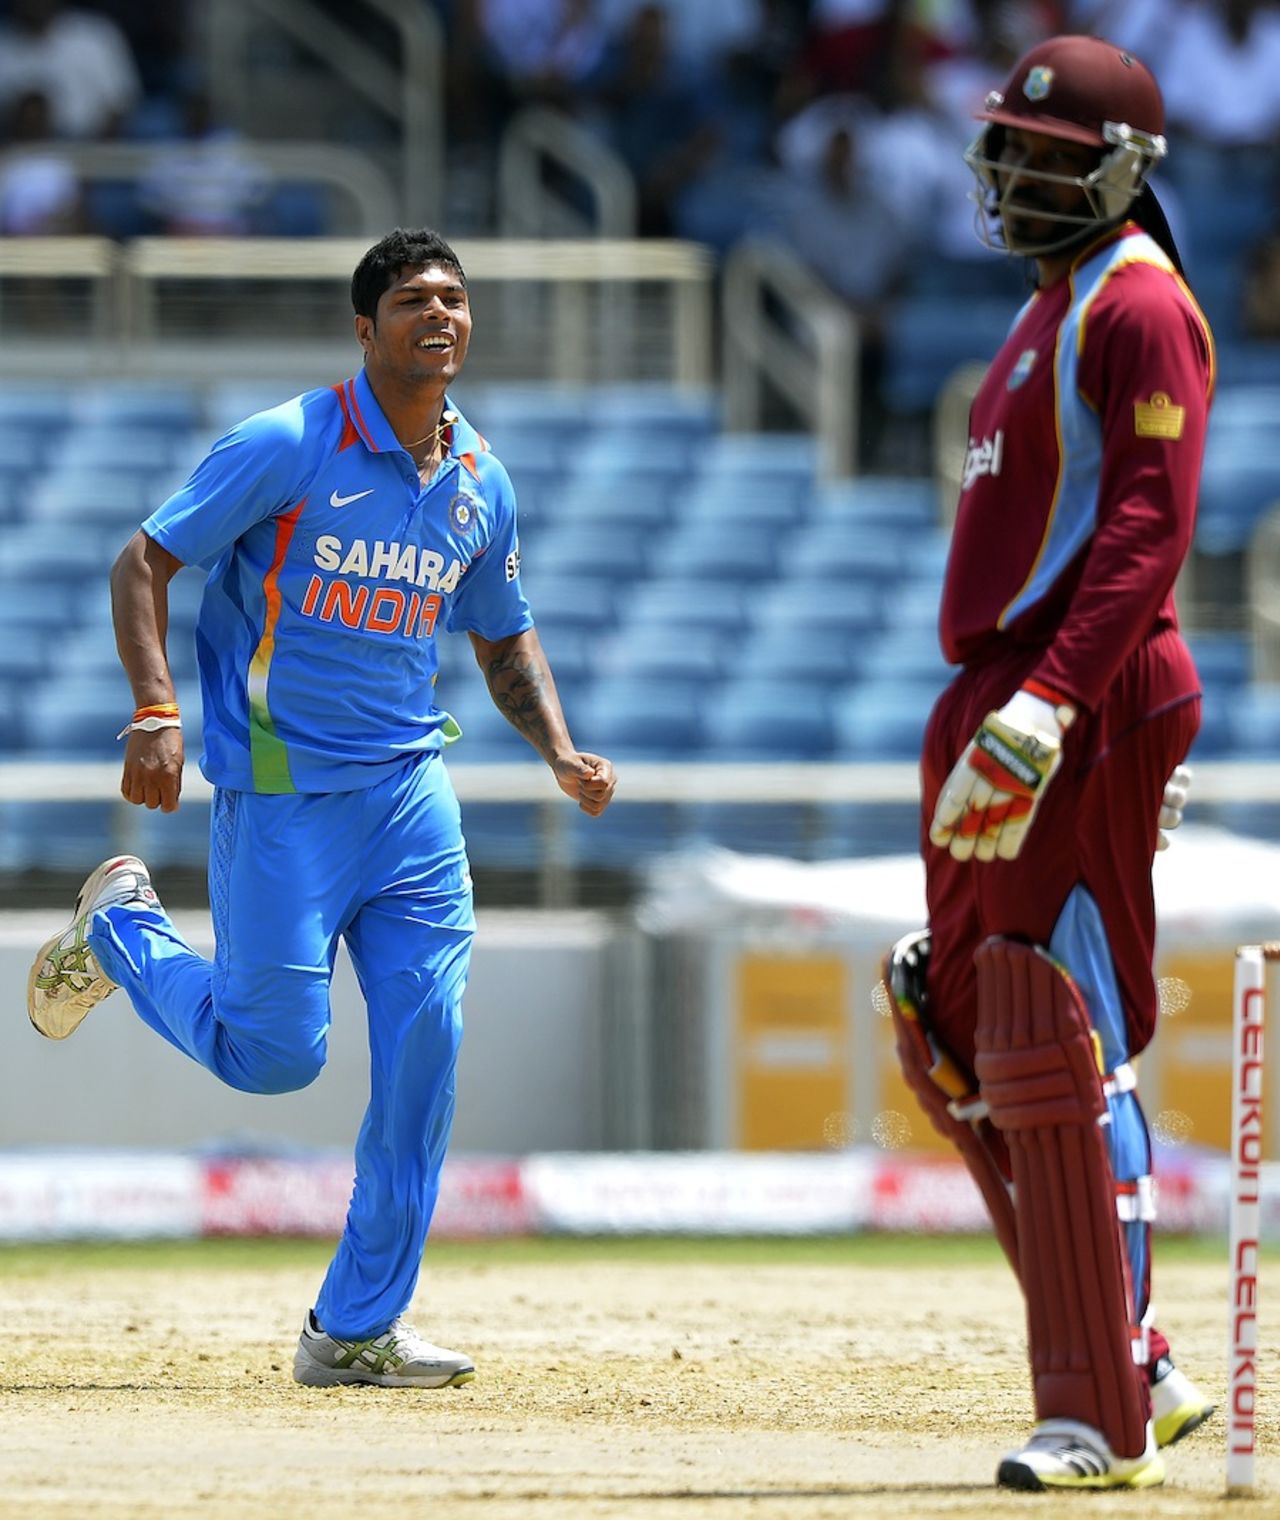 Umesh Yadav got Chris Gayle early, West Indies v India, West Indies tri-series, Kingston, June 30, 2013